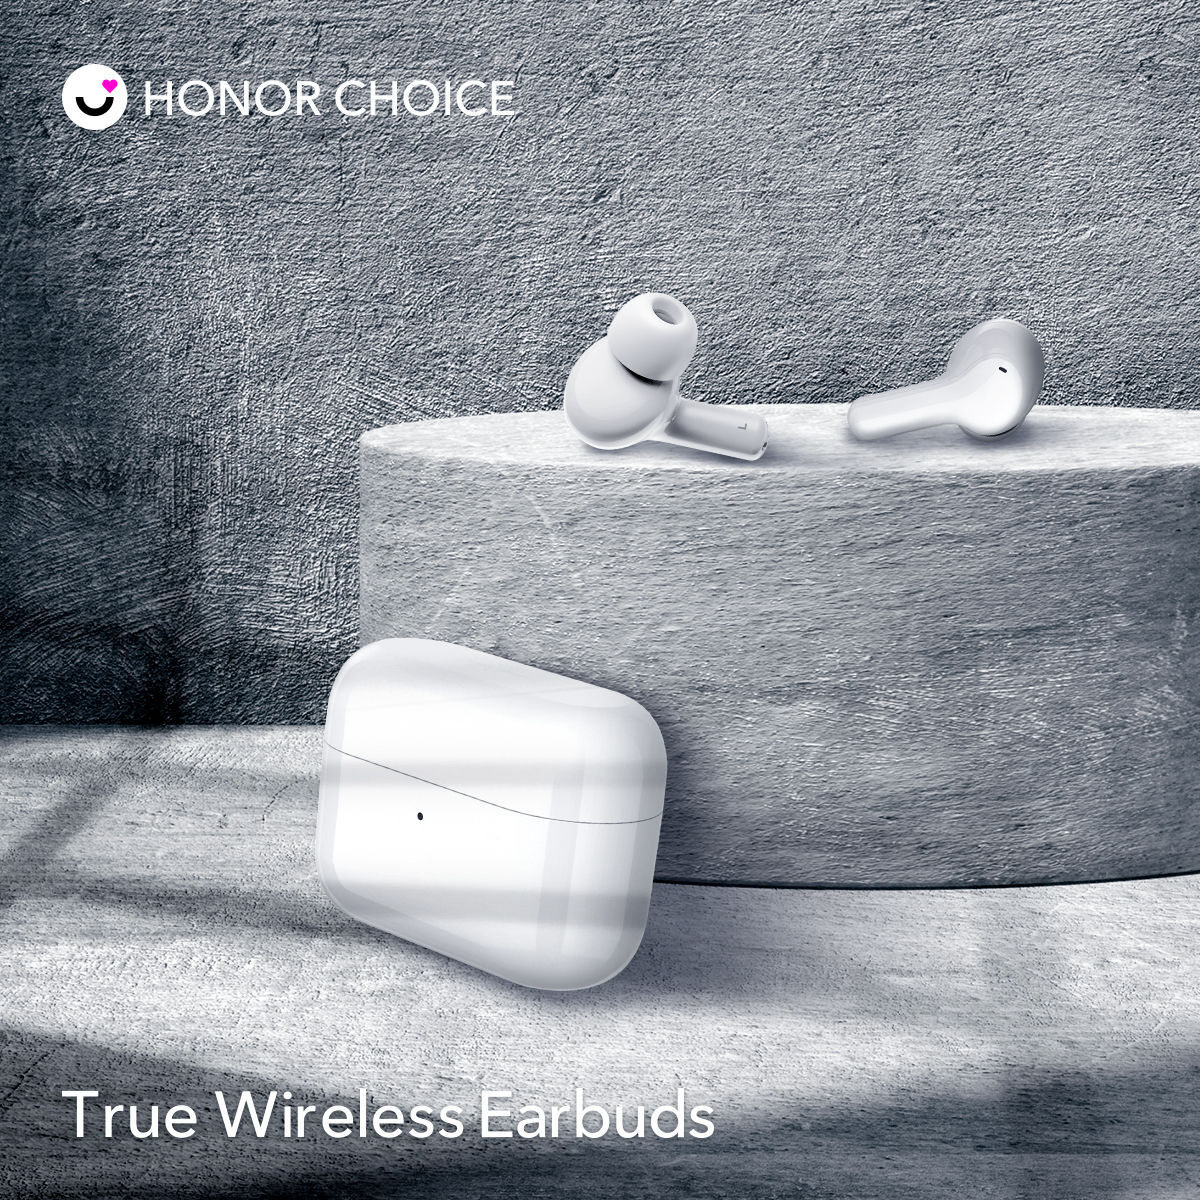 Honor Choice True Wireless Earbuds